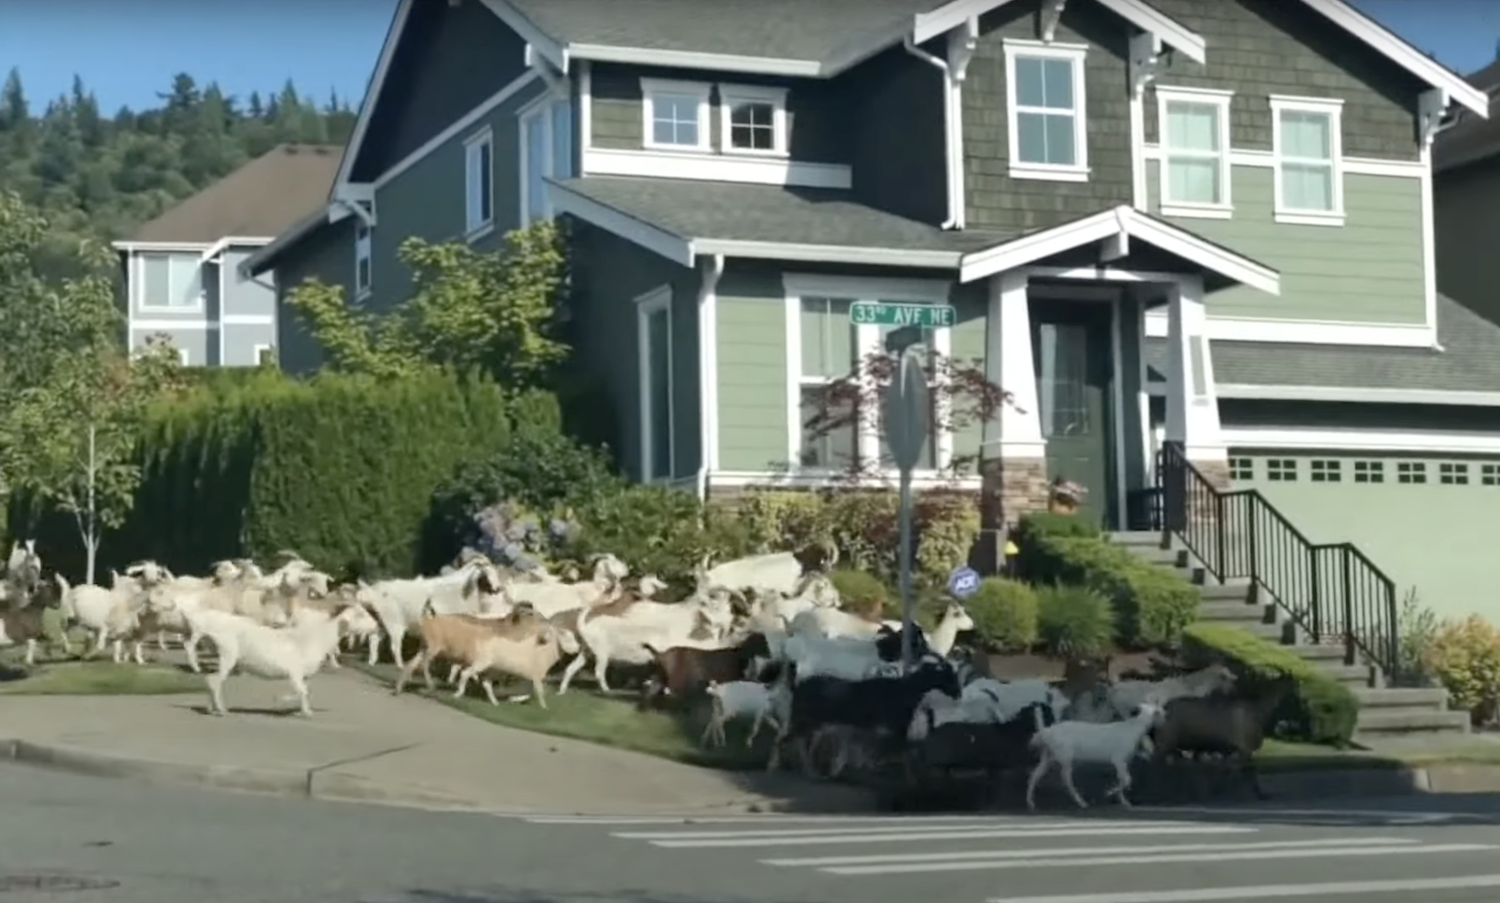 Goats on the Run